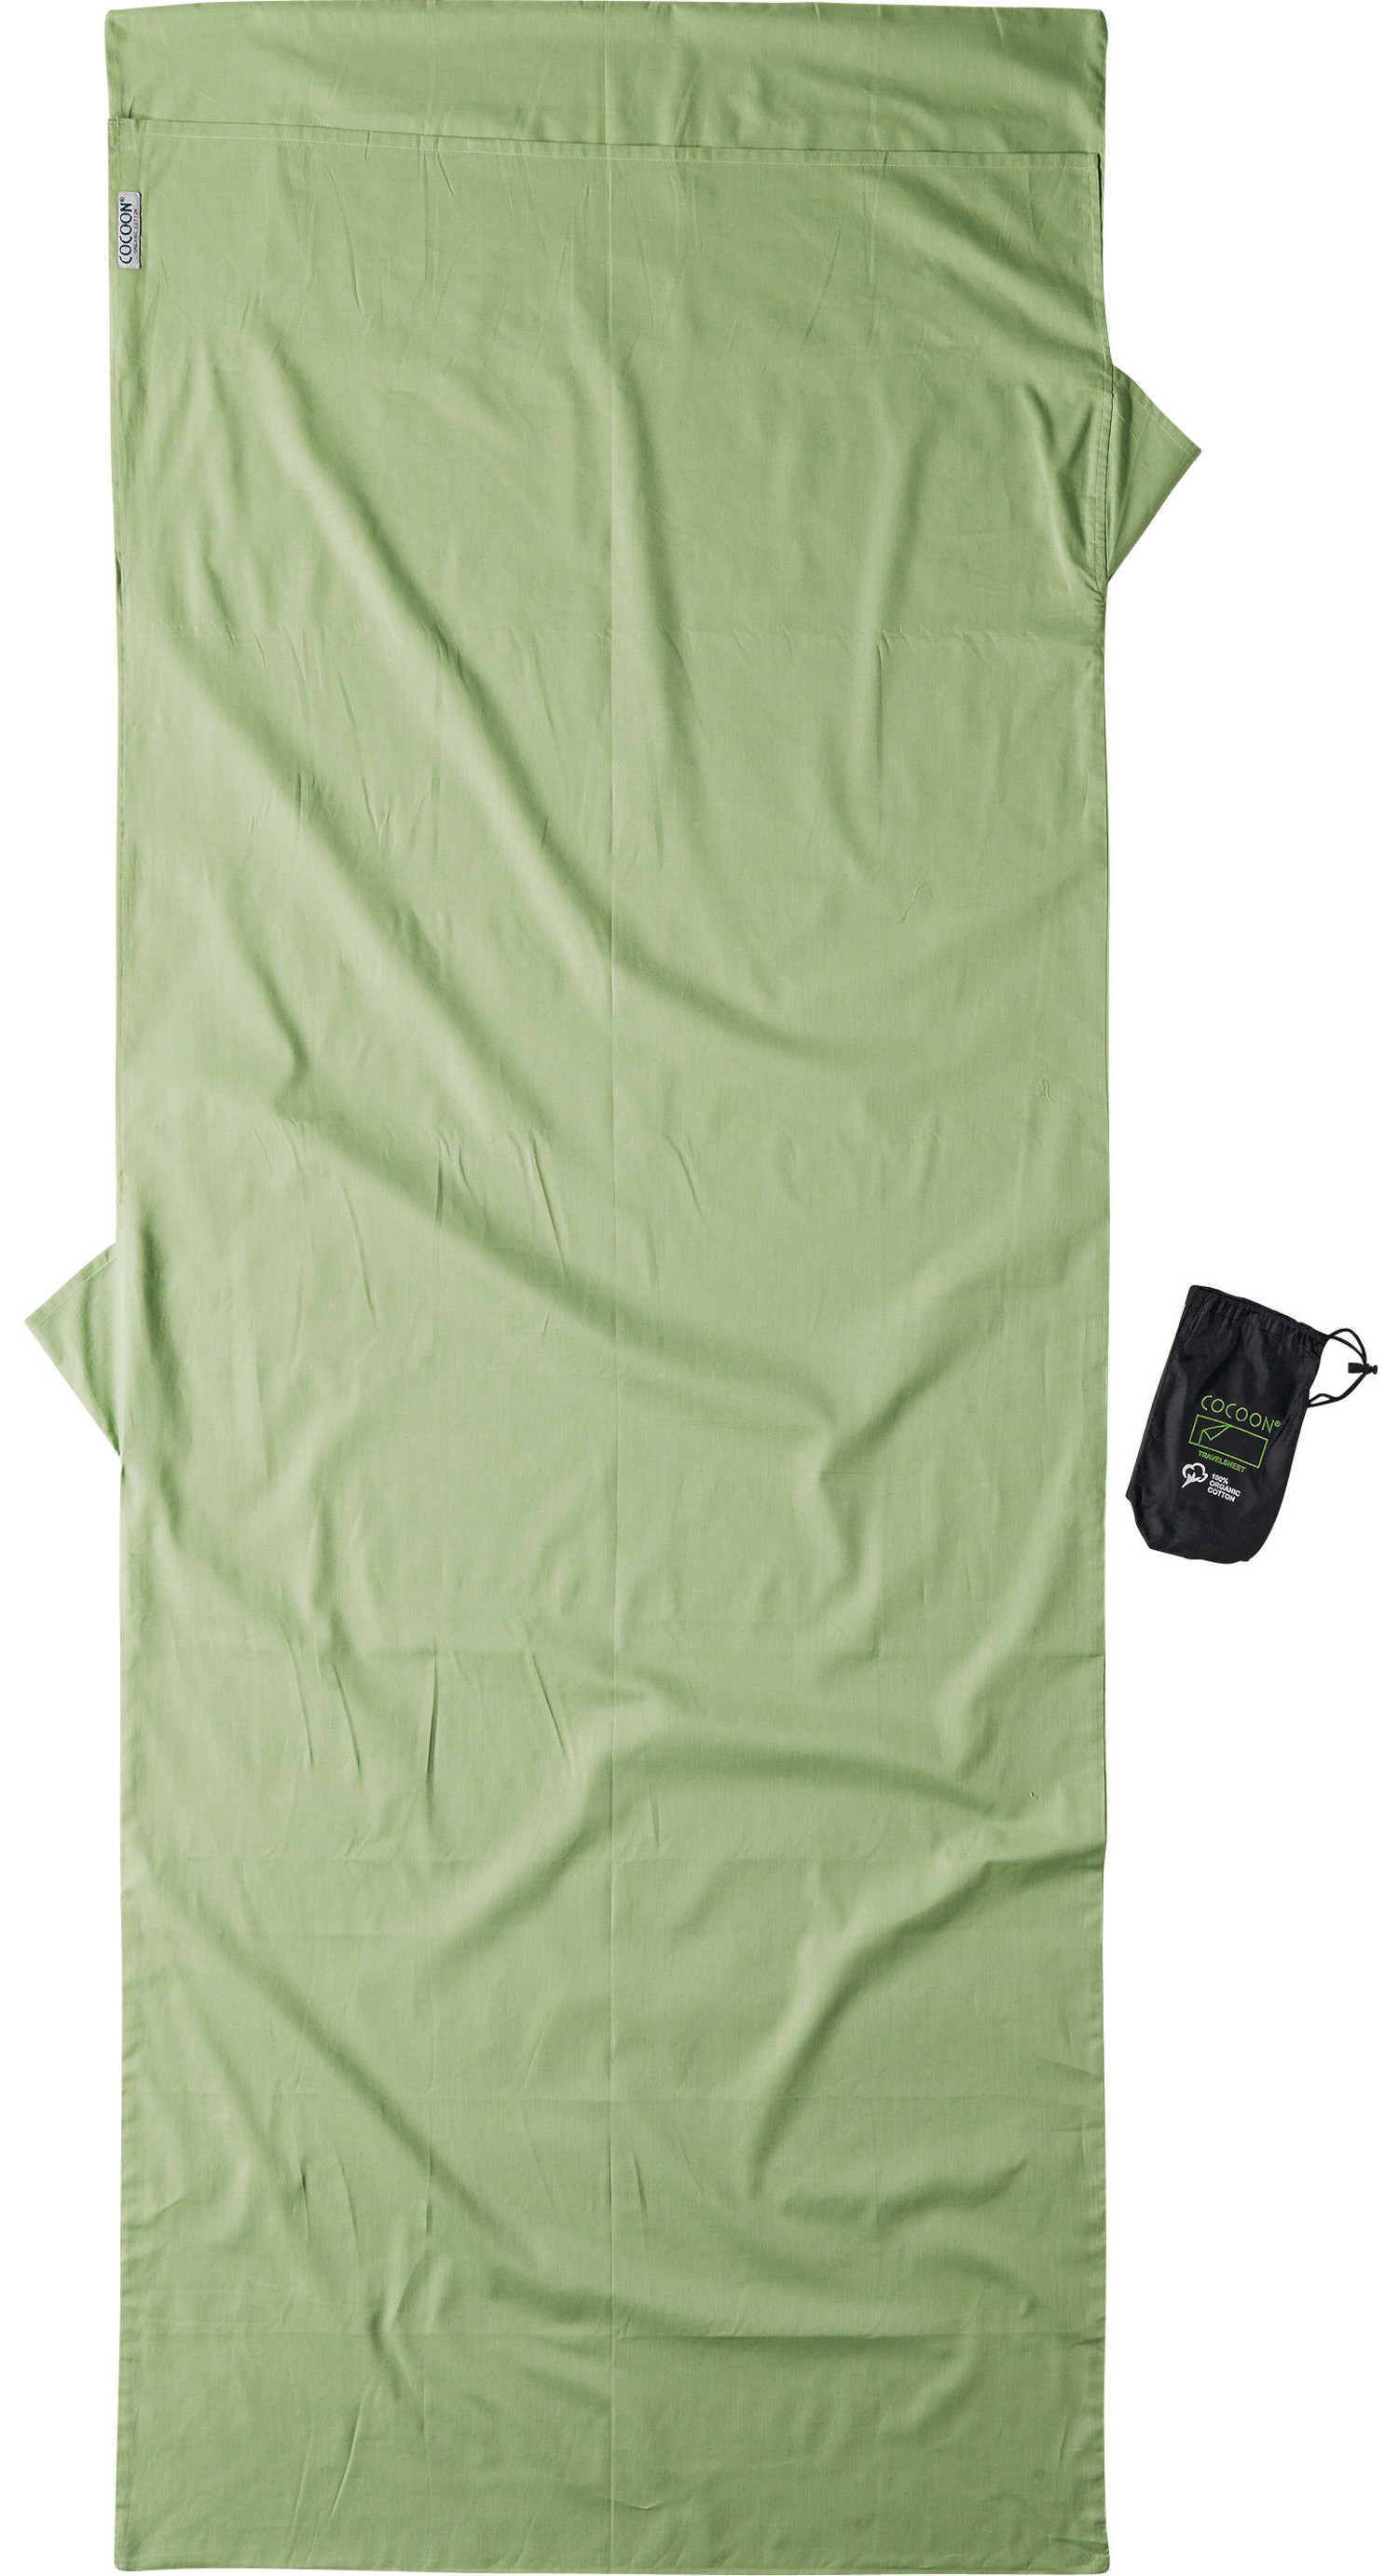 Cocoon TravelSheet Cotton Lightweight Sleeping Bag Liner